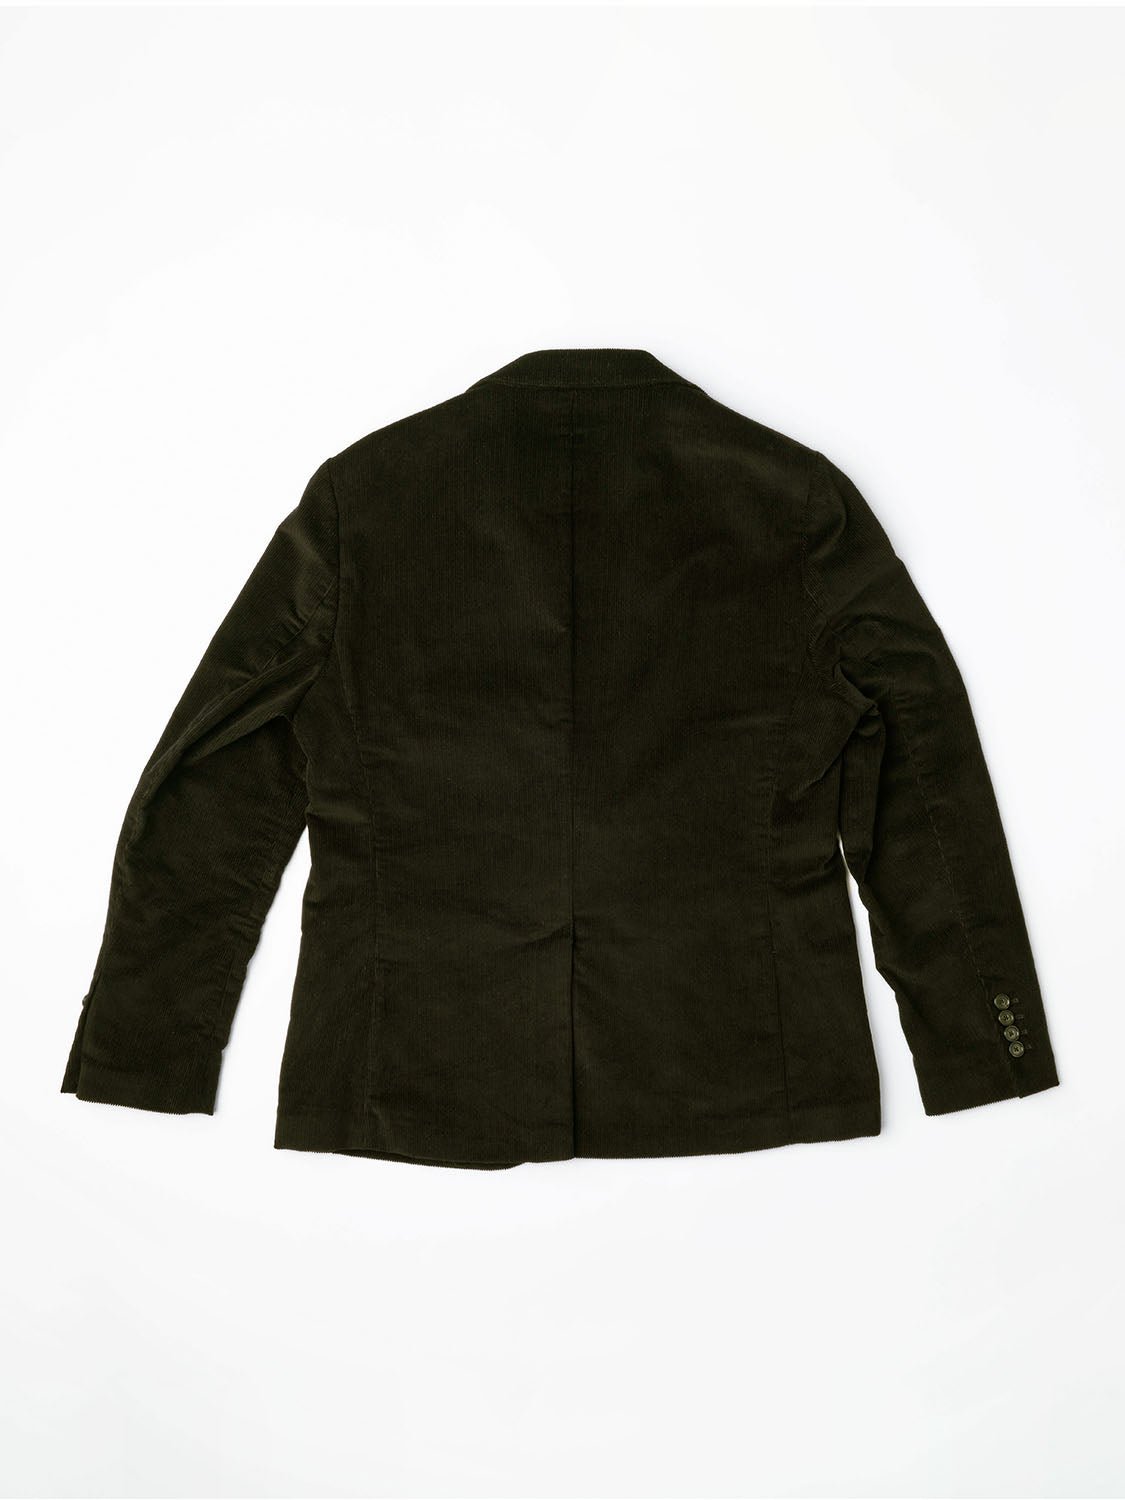 Suit Casca Jacket Corduroy Olive